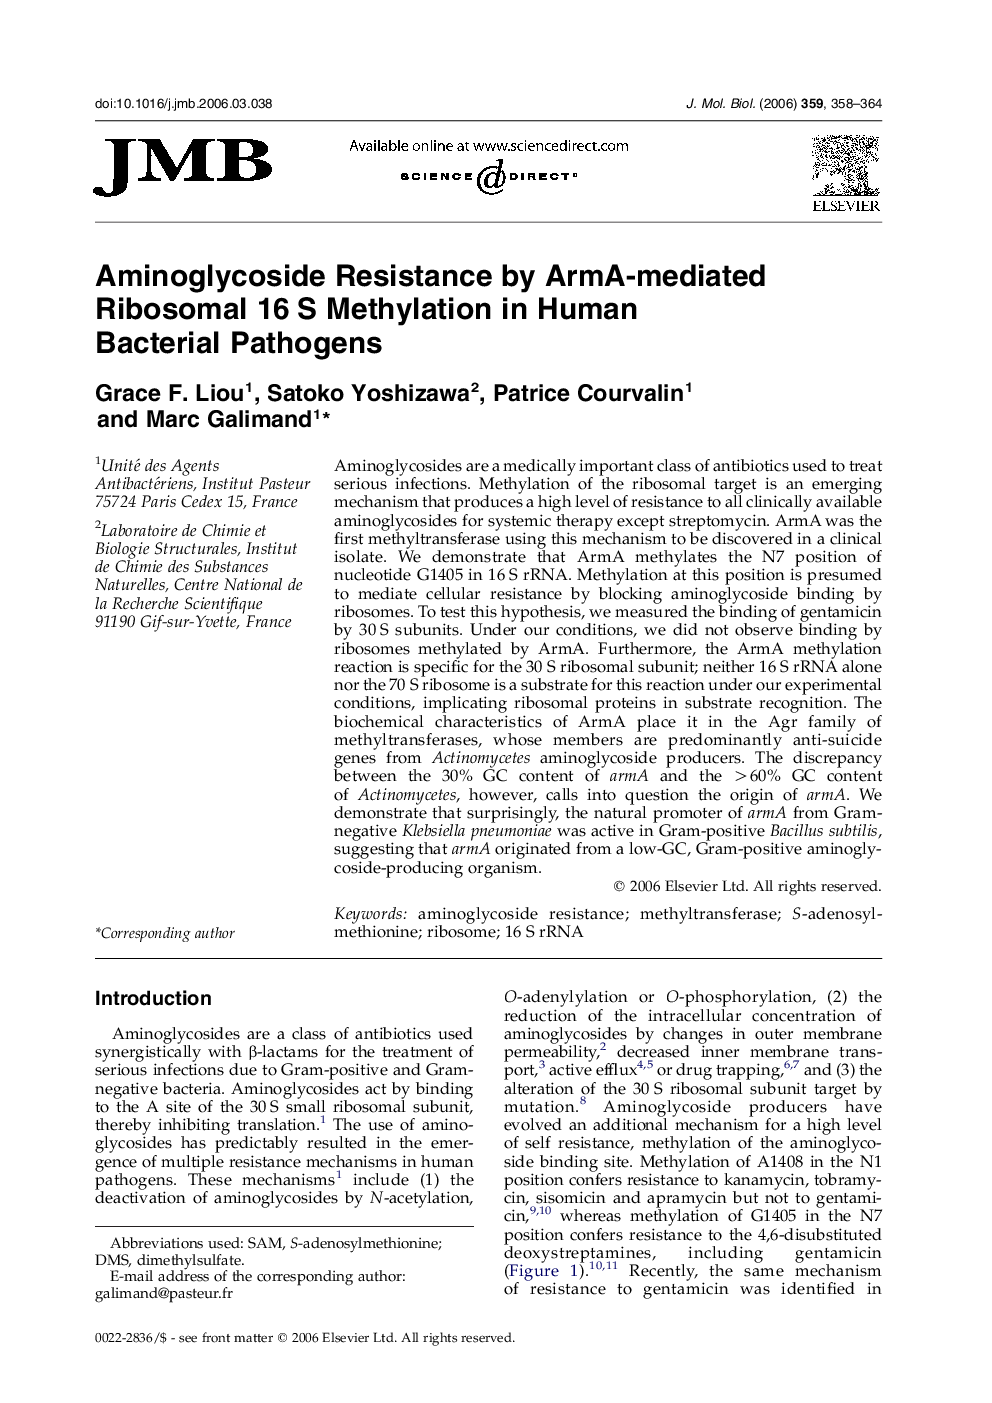 Aminoglycoside Resistance by ArmA-mediated Ribosomal 16 S Methylation in Human Bacterial Pathogens